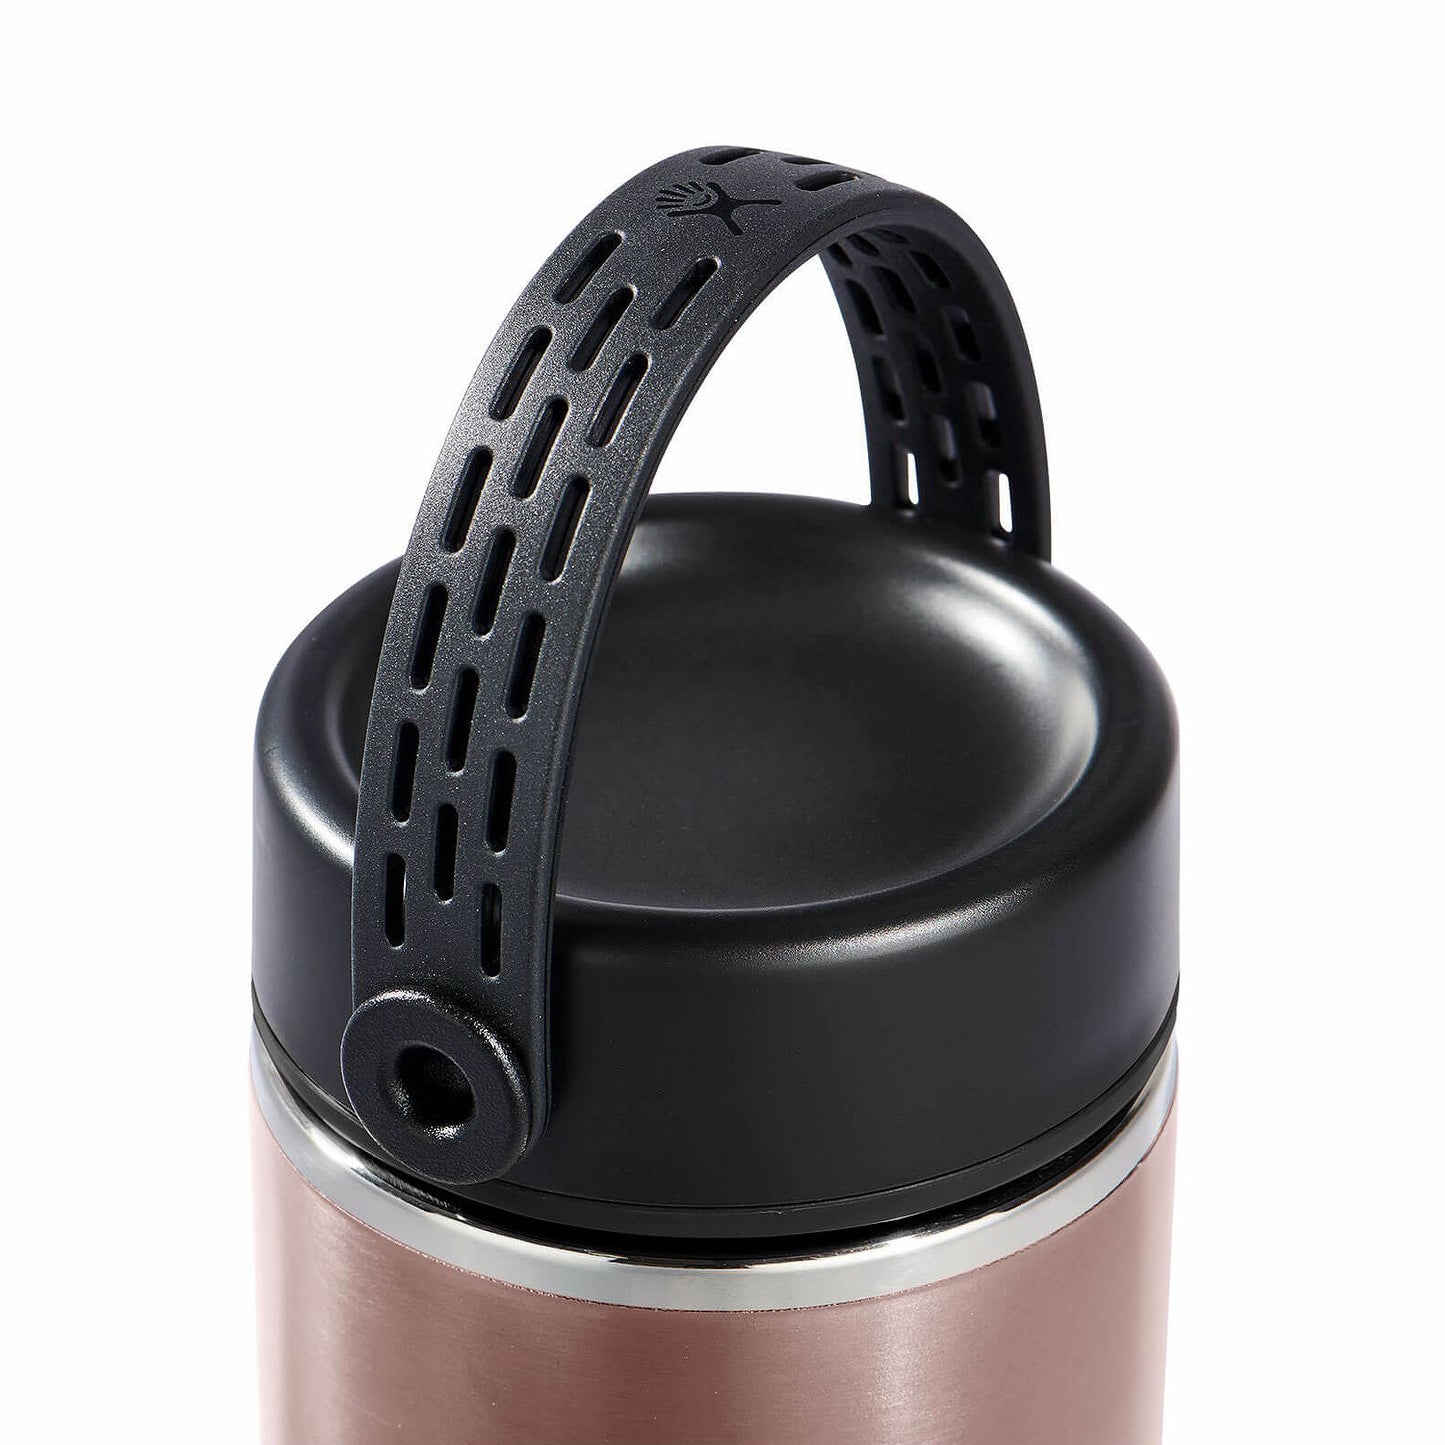 Hydro Flask Lightweight Wide Mouth Trail Series™ + Straw Cap, 946 ml (32oz)